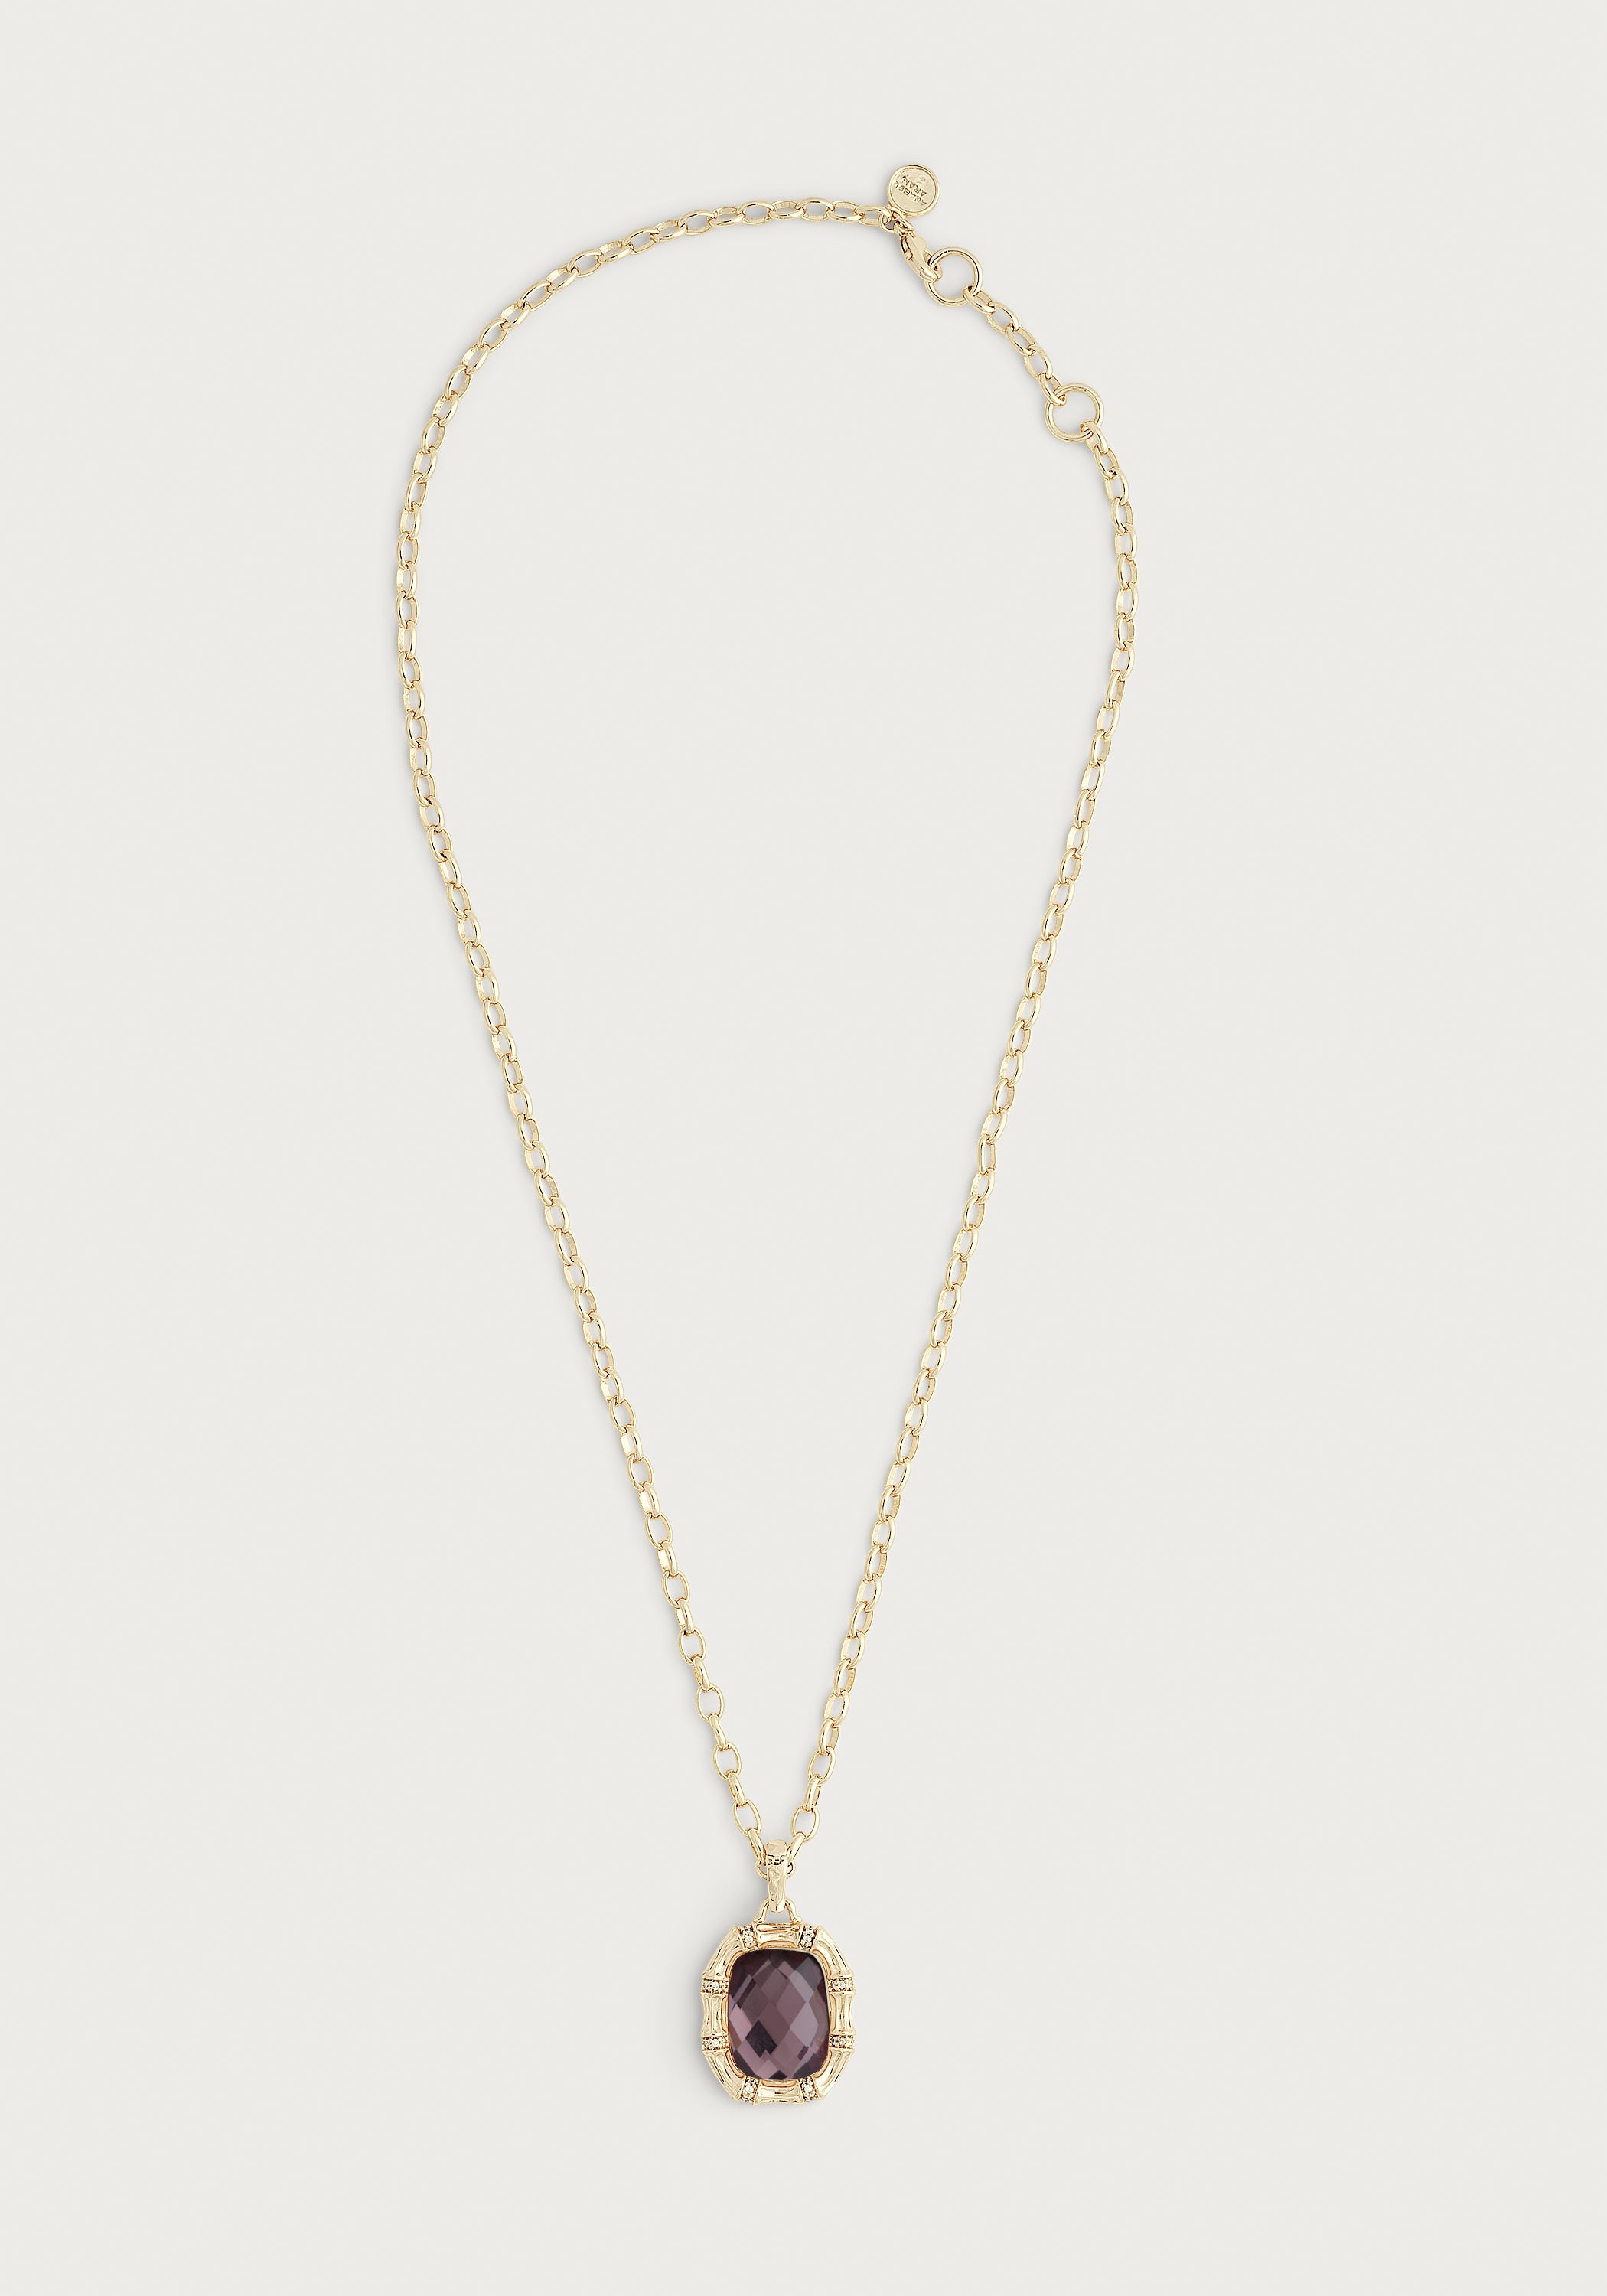 Bamboo With Stone Pendant Necklace - Gemstones